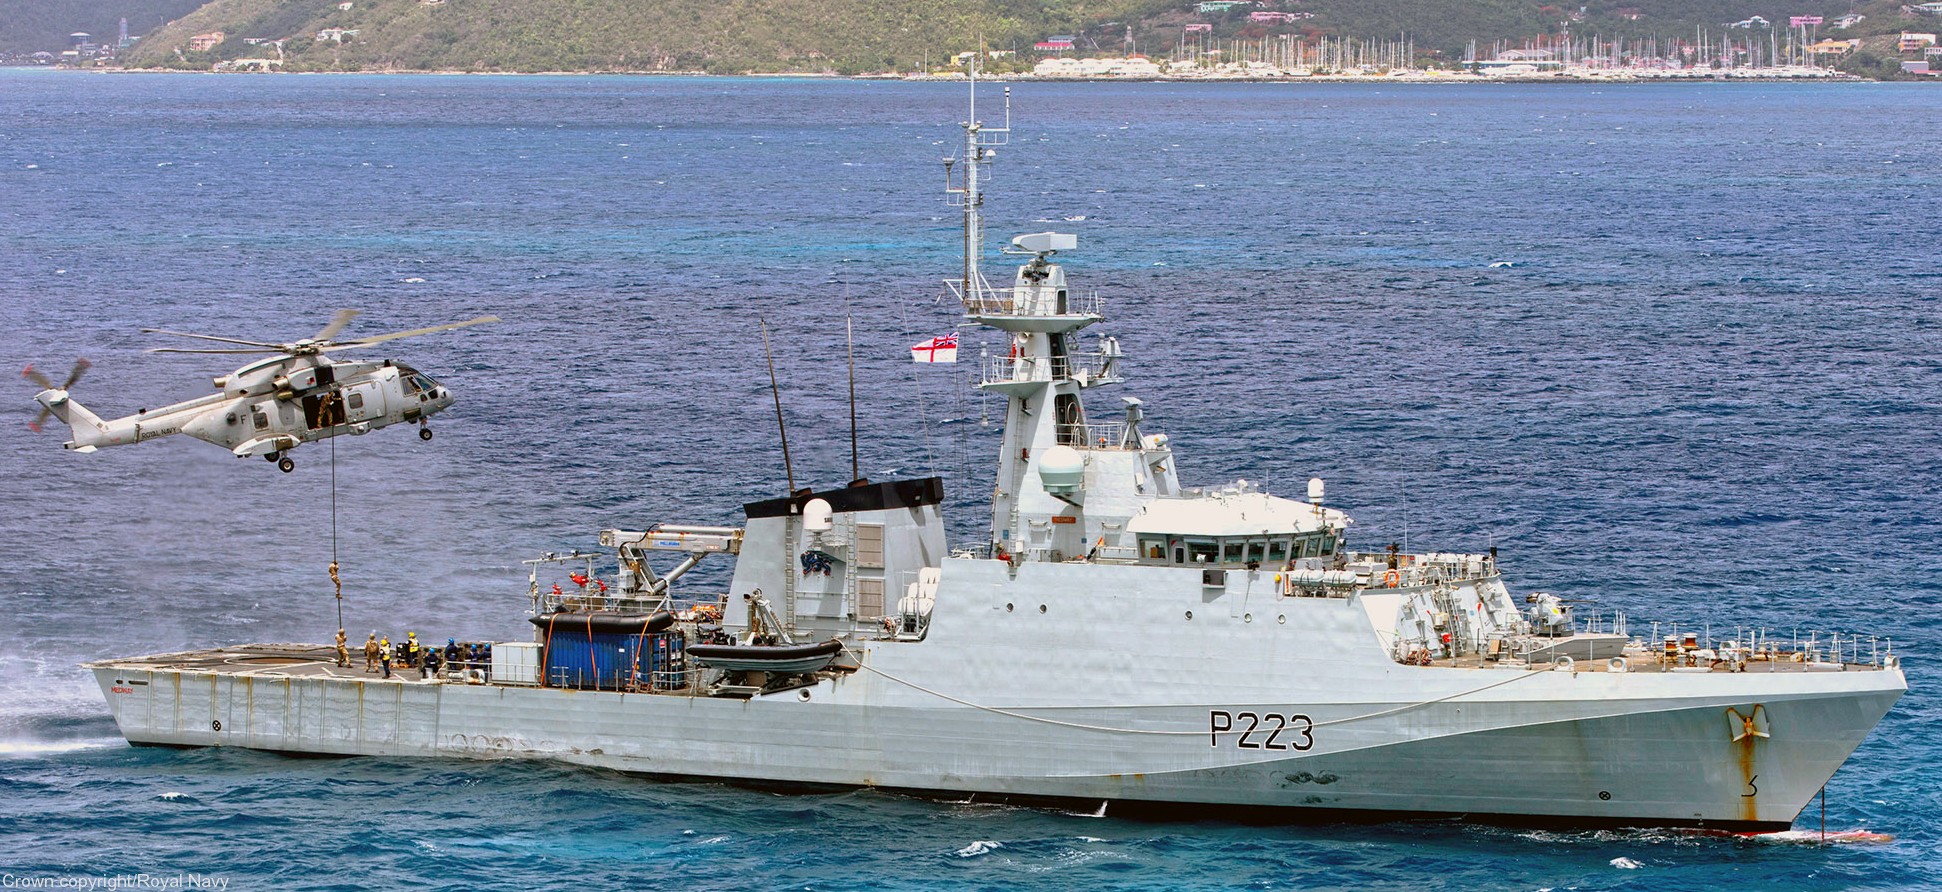 p-223 hms medway river class offshore patrol vessel opv royal navy 11